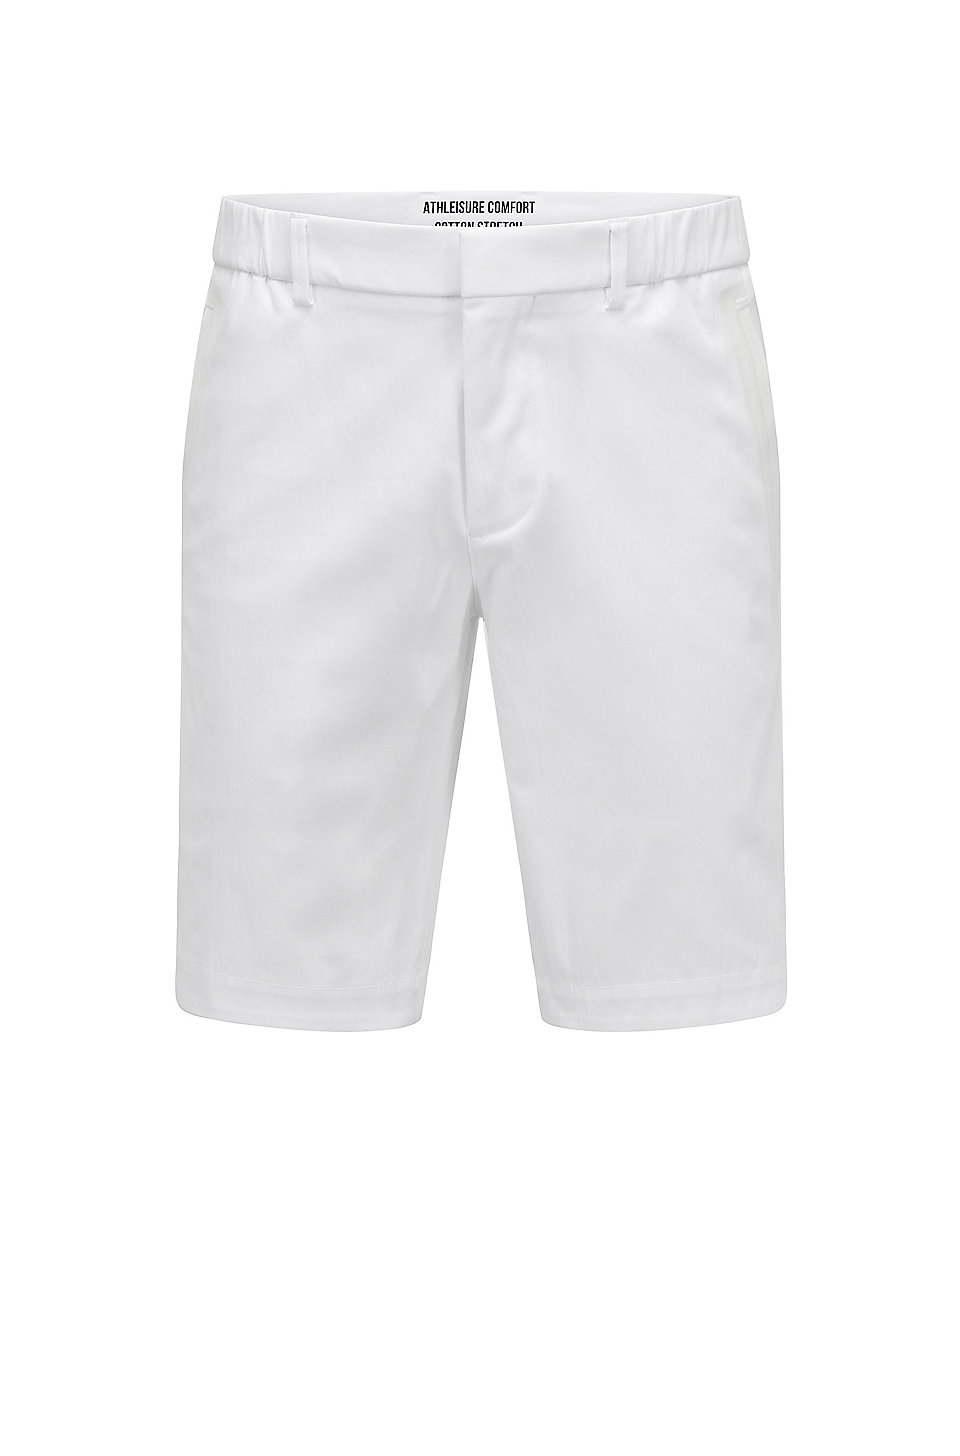 BOSS - Slim-fit regular-rise shorts in a cotton blend